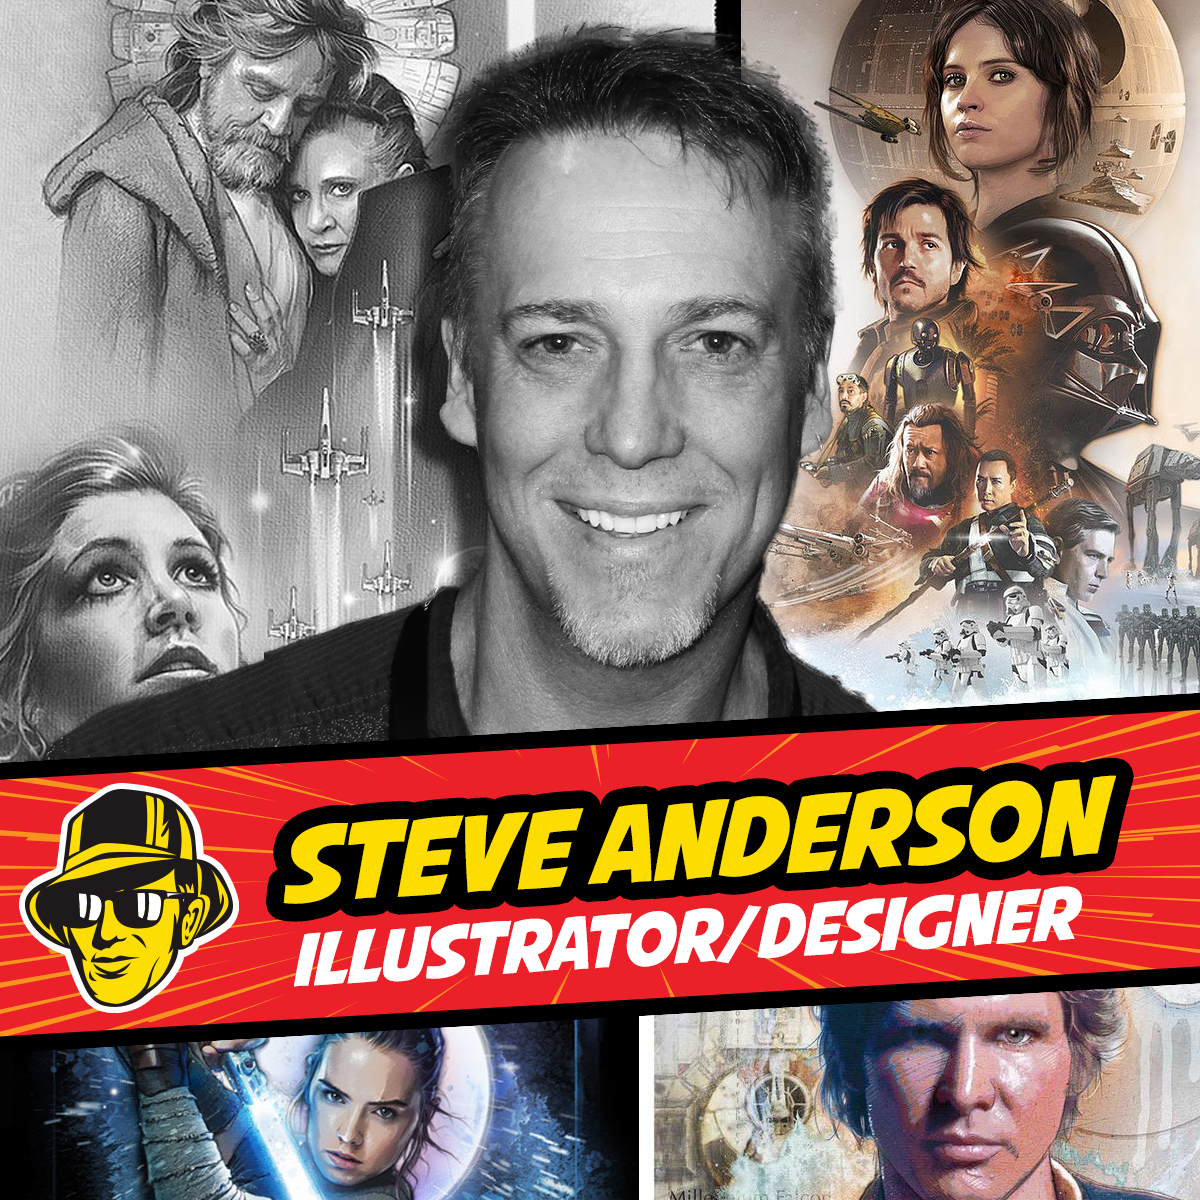 Steven Anderson illustrator/designer at Celebrity Fan Fest